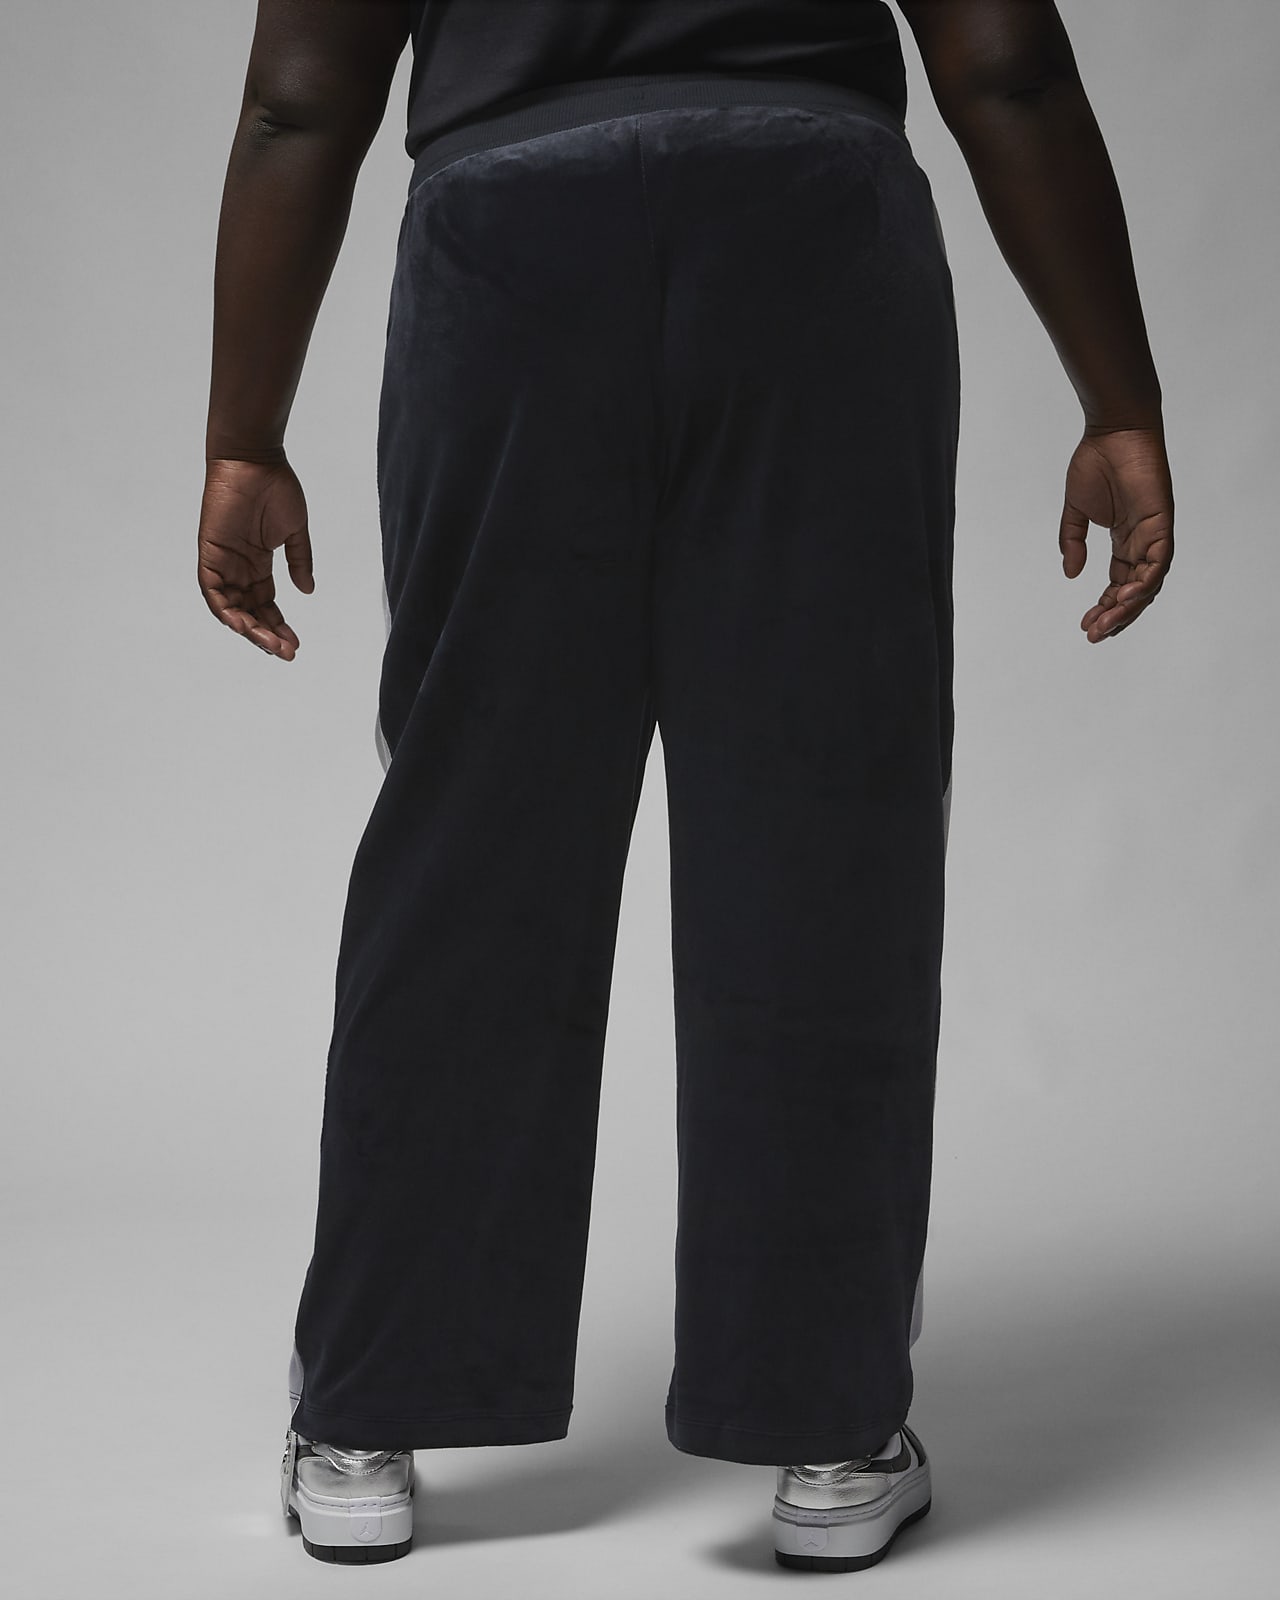 Indica blotte dejligt at møde dig Jordan Flight Women's Velour Pants (Plus Size). Nike.com